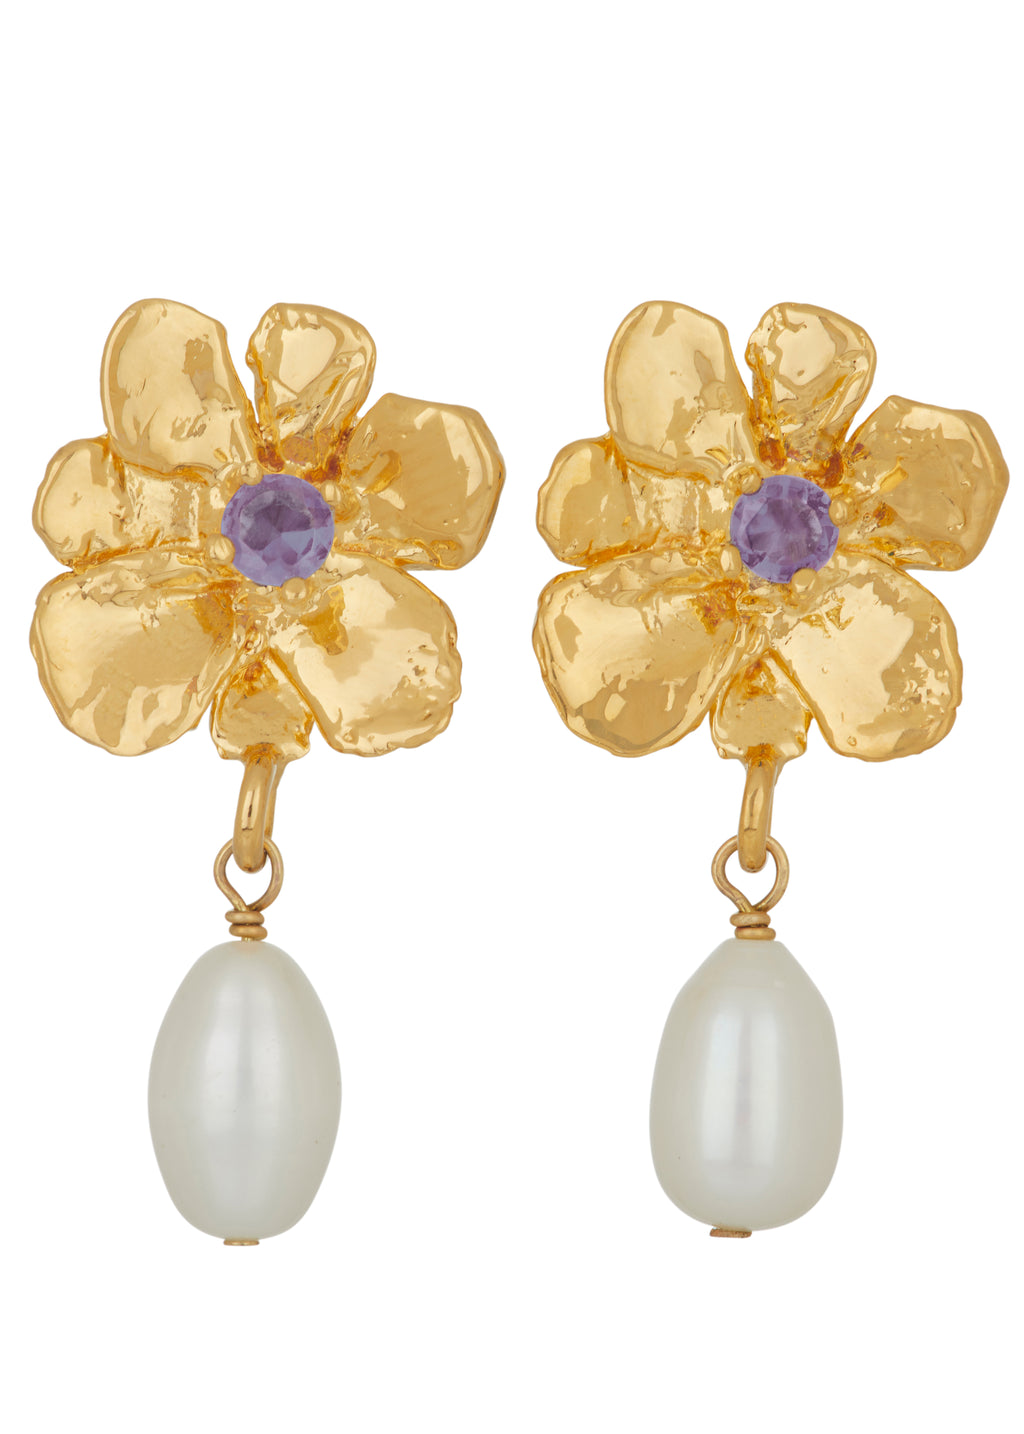 Flower Pearl Drop Earrings in Gold - Violet